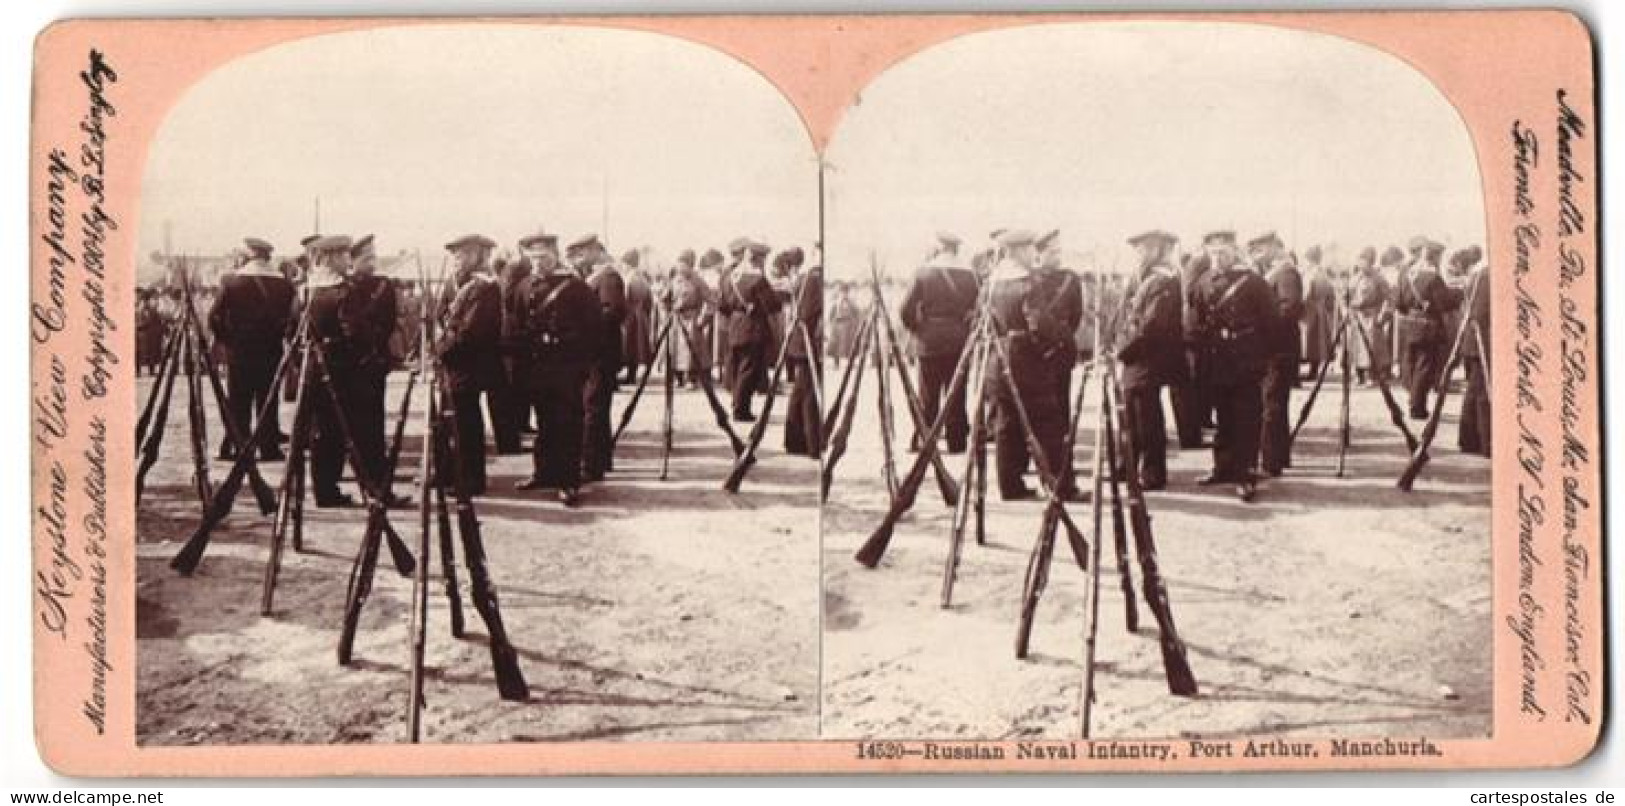 Stereo-Fotografie Keystone View Company, Meadville /Pa, Ansicht Port Arthur /Manchuria, Russian Naval Infantry  - Stereoscopio